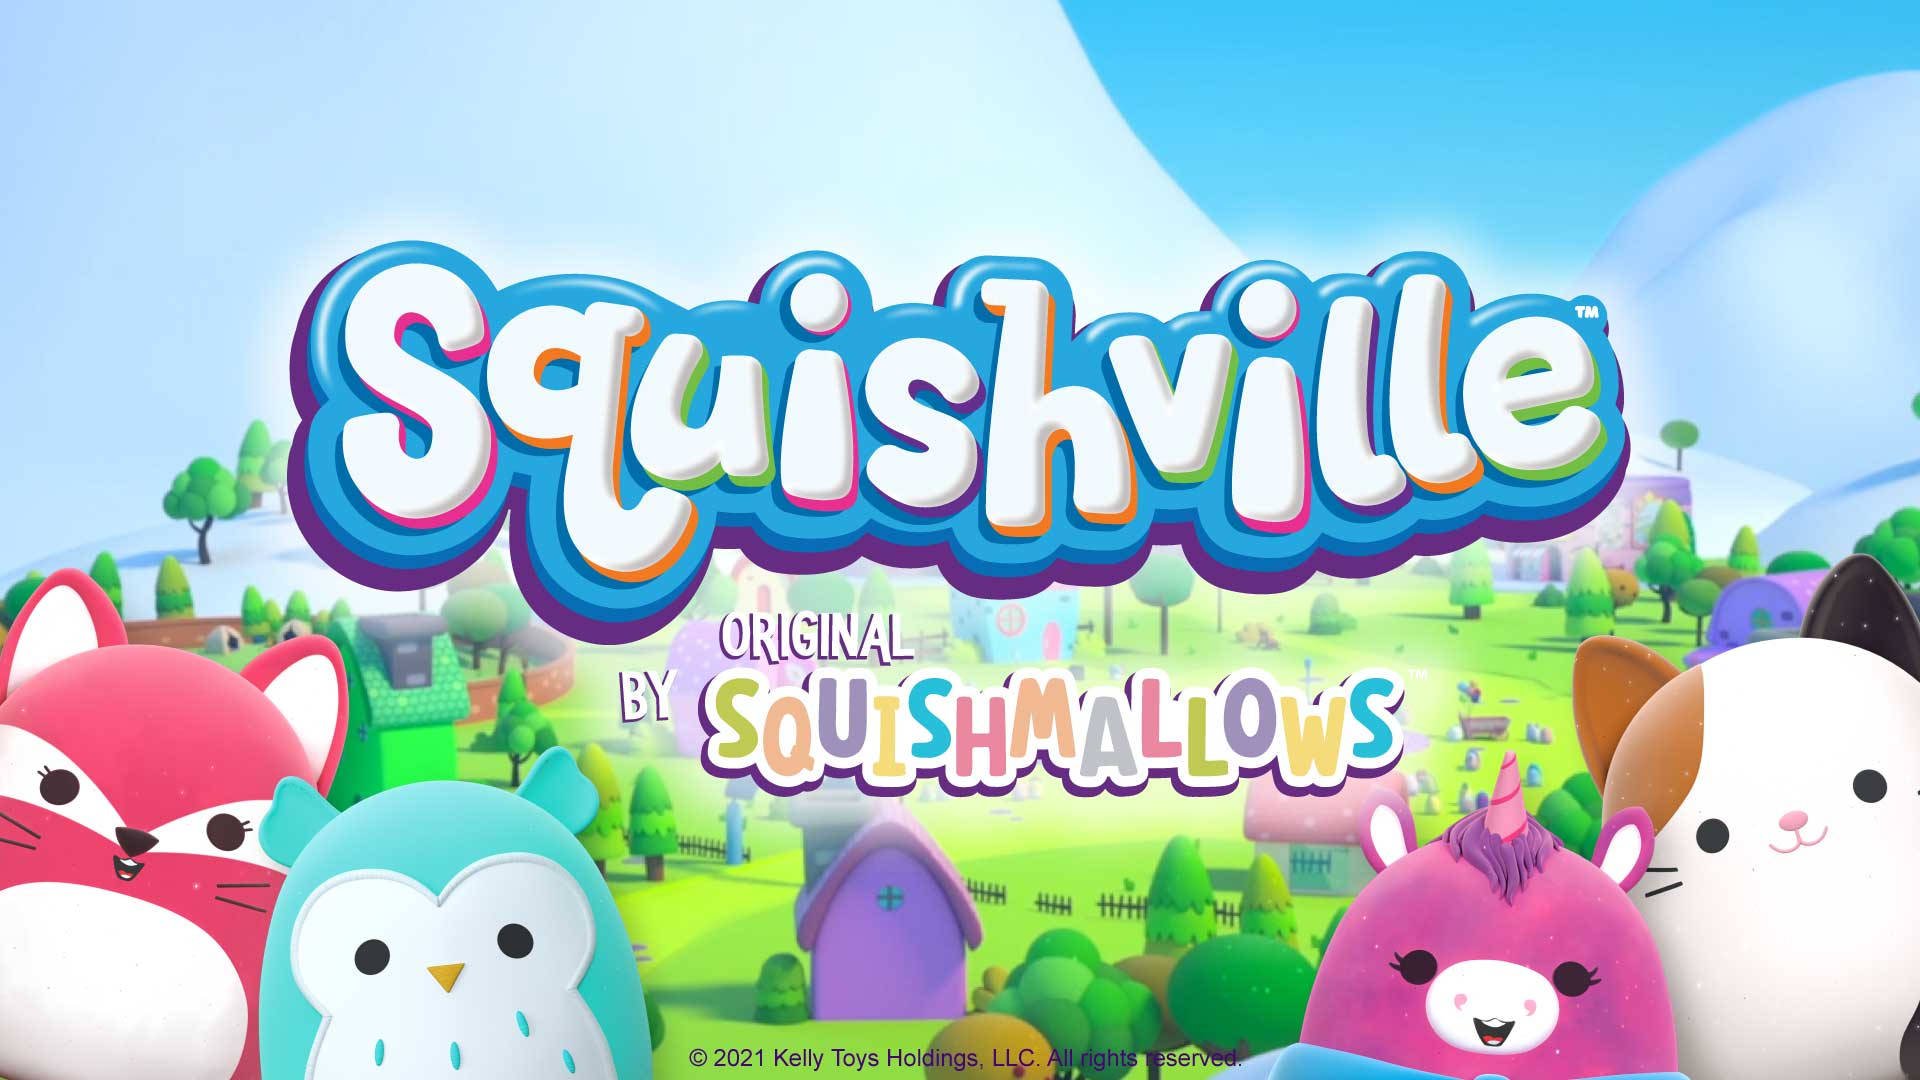 Free Squishmallows Wallpaper Downloads, Squishmallows Wallpaper for FREE